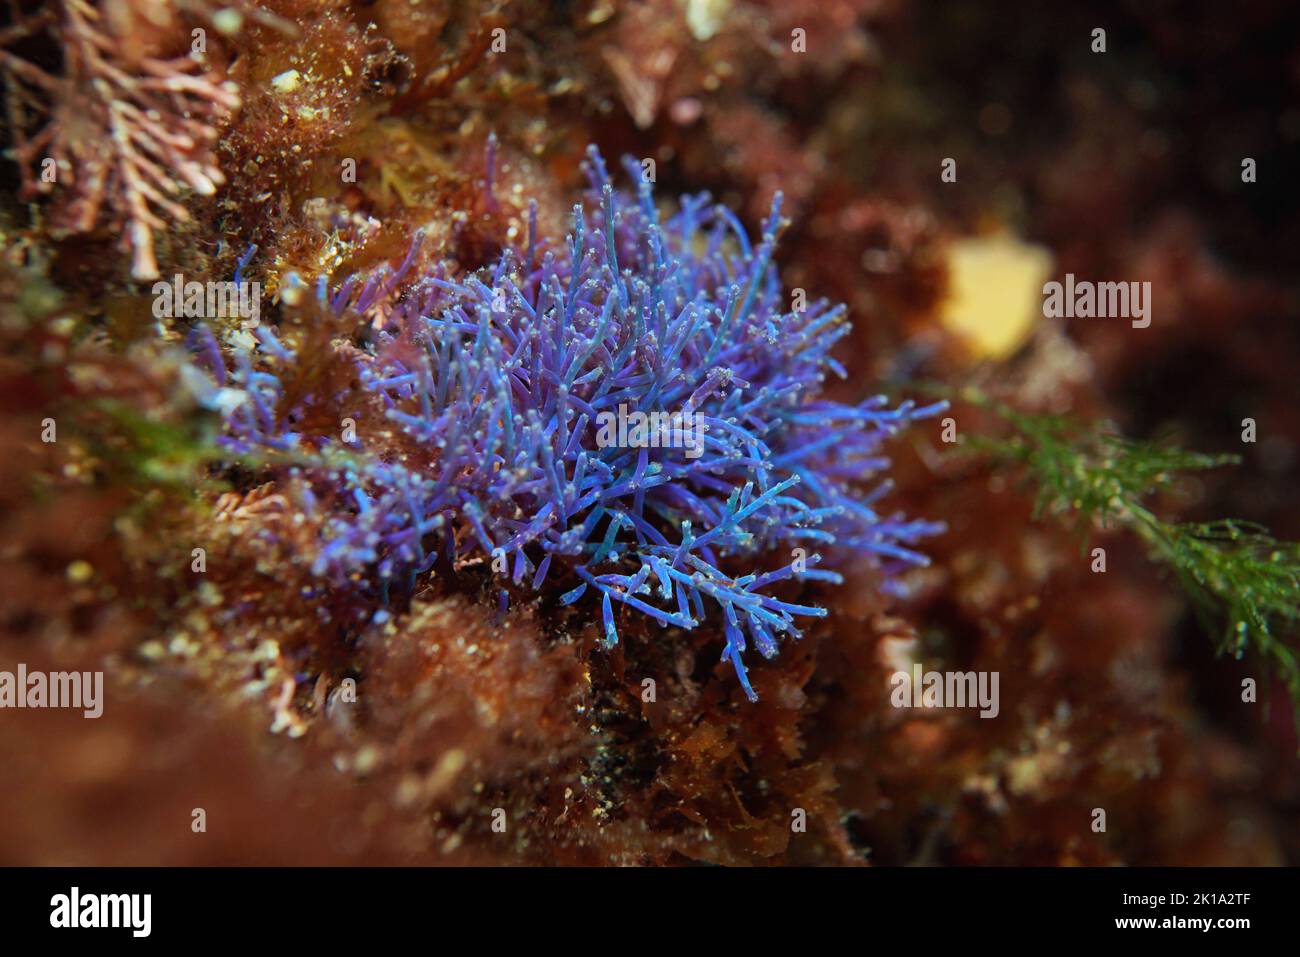 Iridescent cartilage weed alga Chondria coerulescens,  underwater in the Atlantic ocean, Spain Stock Photo